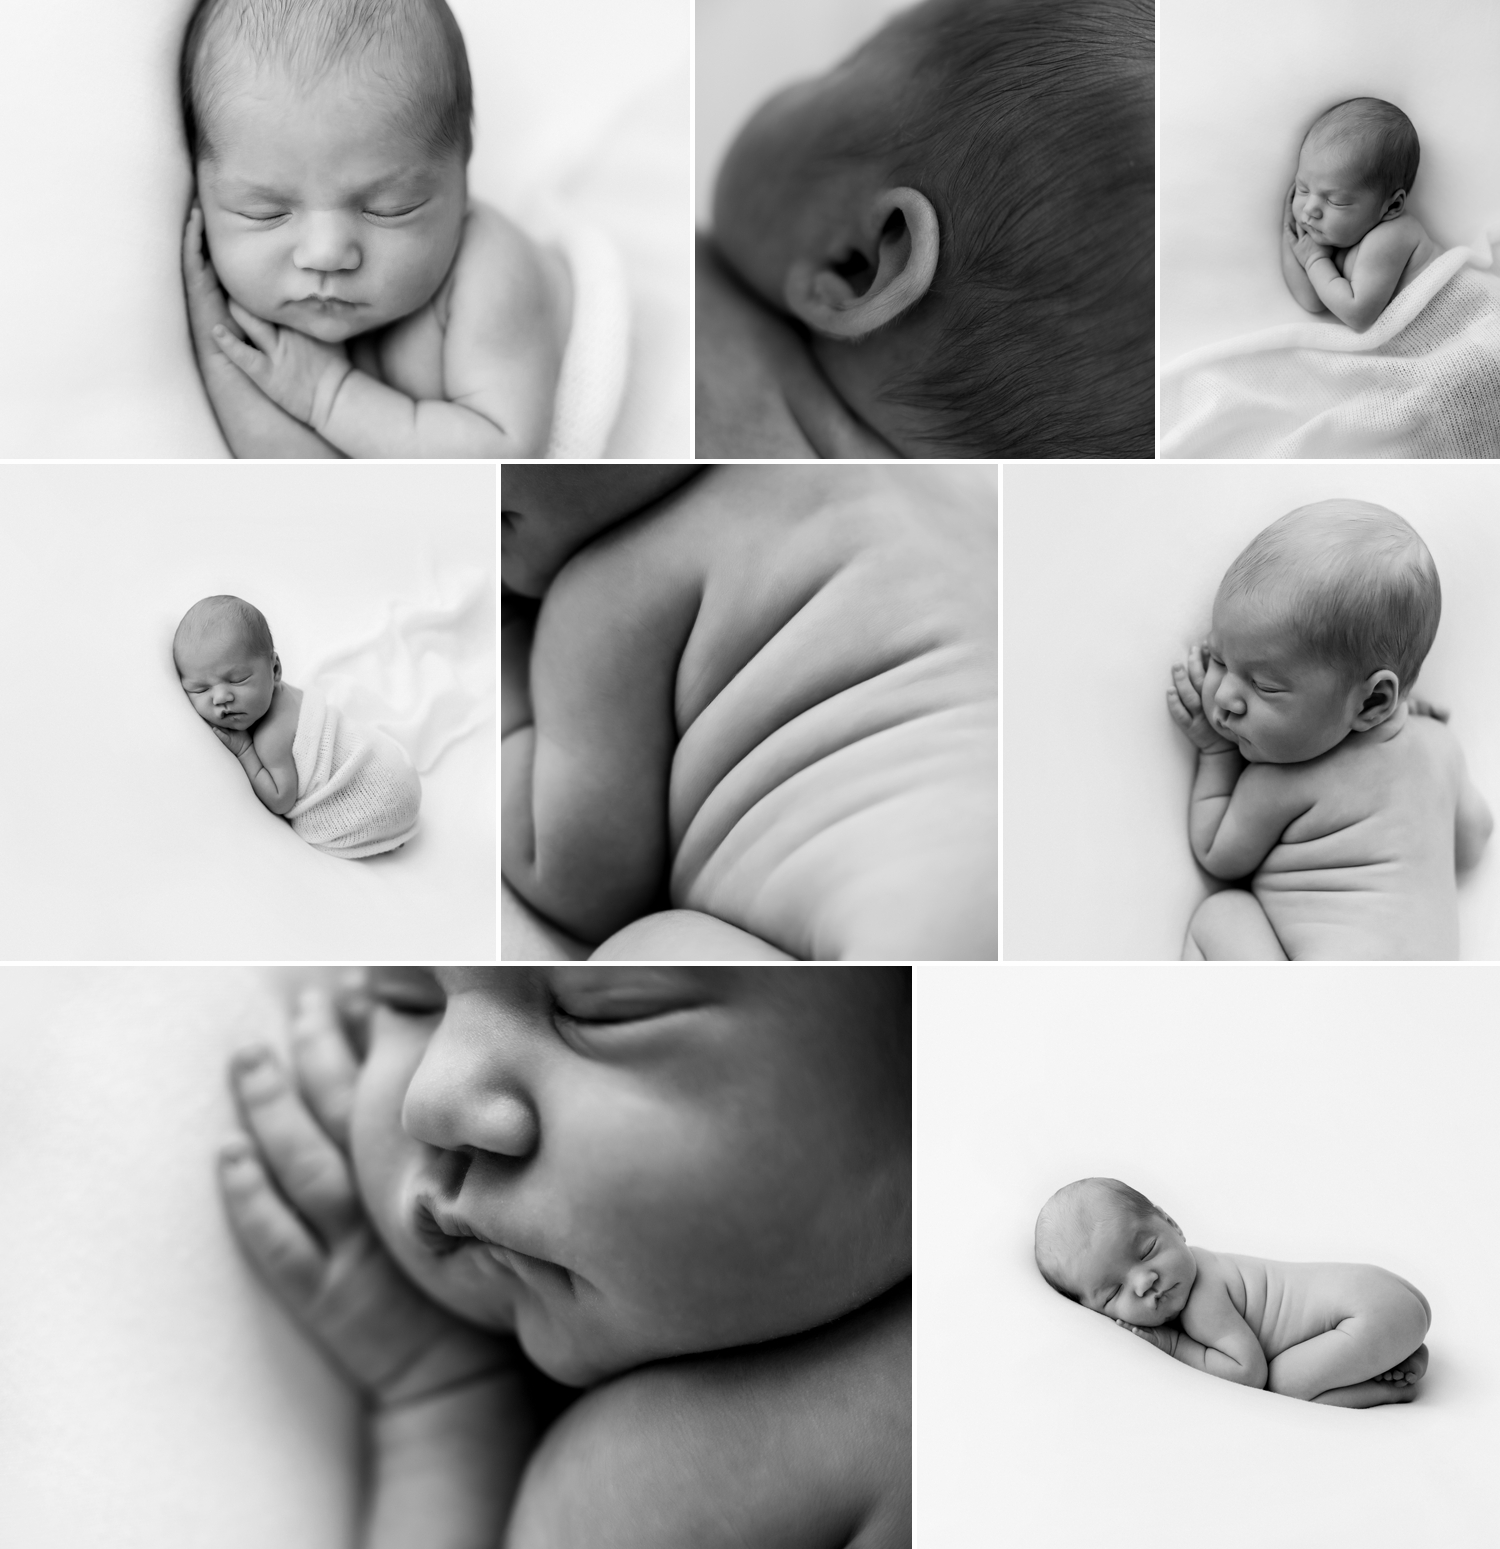 Natural &nbsp;newborn photography in NYC by photographer Lola Melani. Artistic b&amp;w newborn photos, fine-art newborn baby photography. Book your newborn session